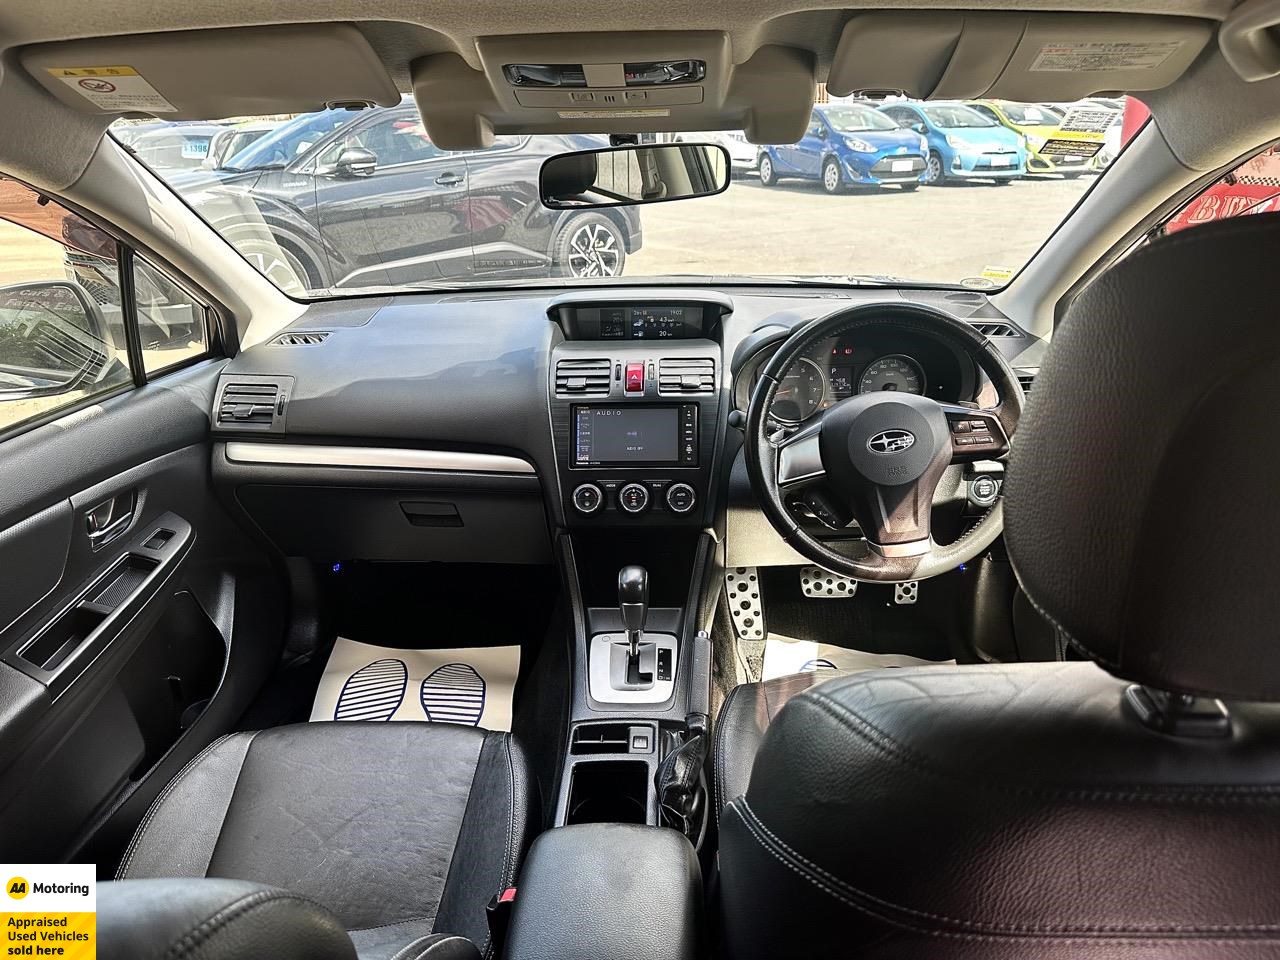 2012 Subaru Impreza